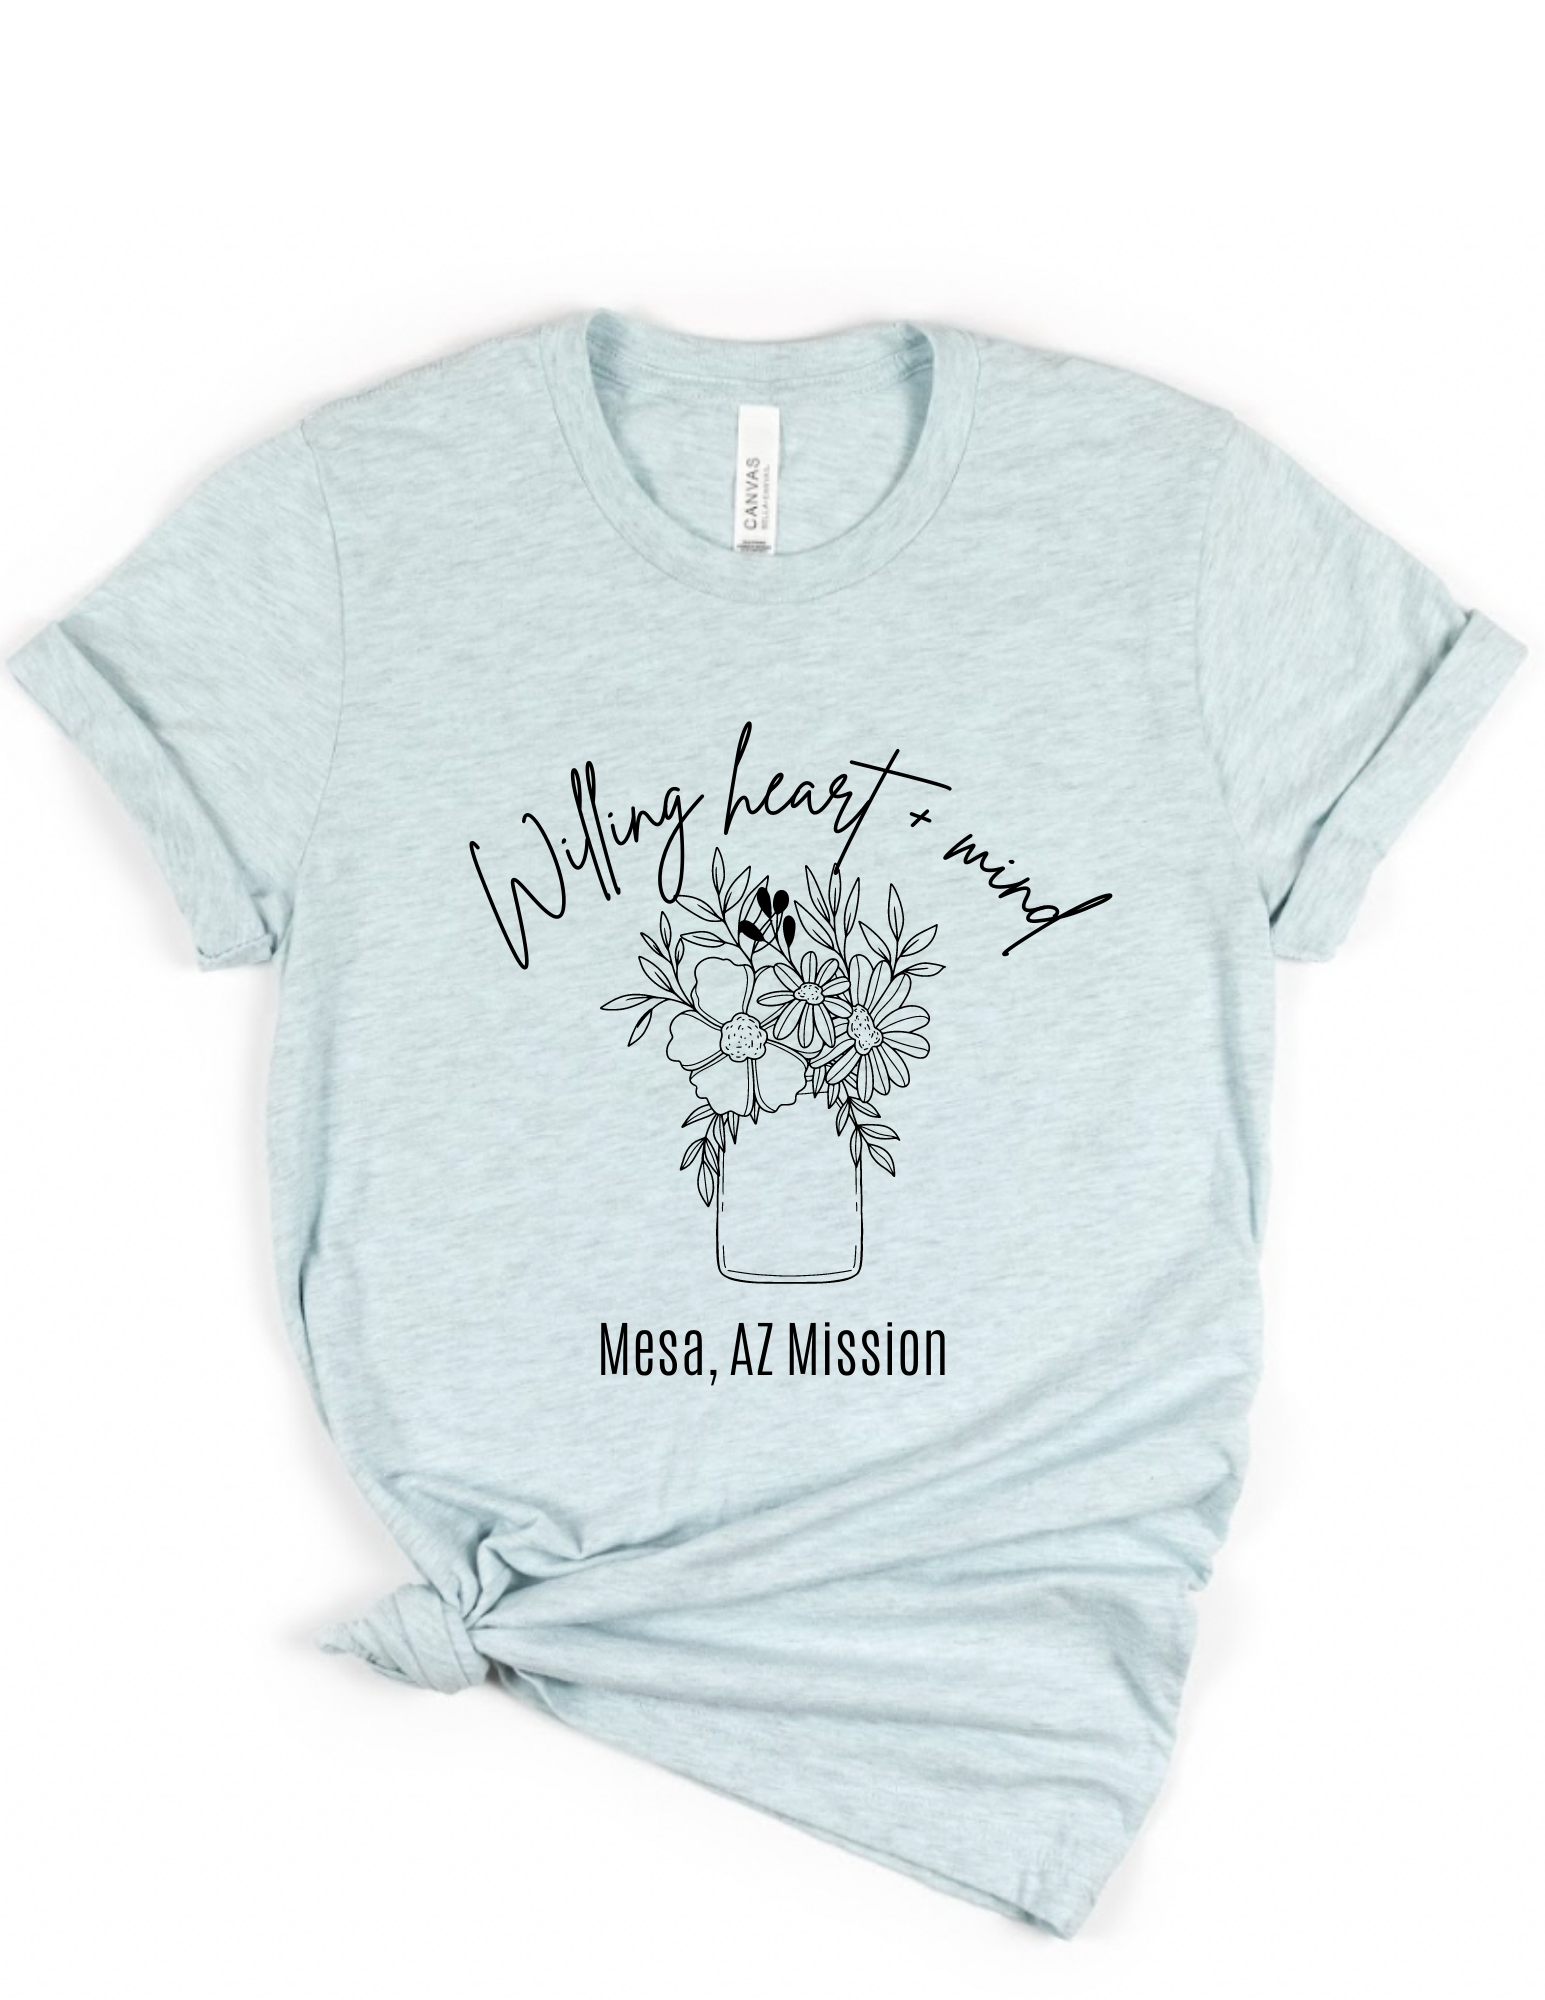 & Willing Mission Uplift Mind Heart Name T-Shirt Custom + Wear –